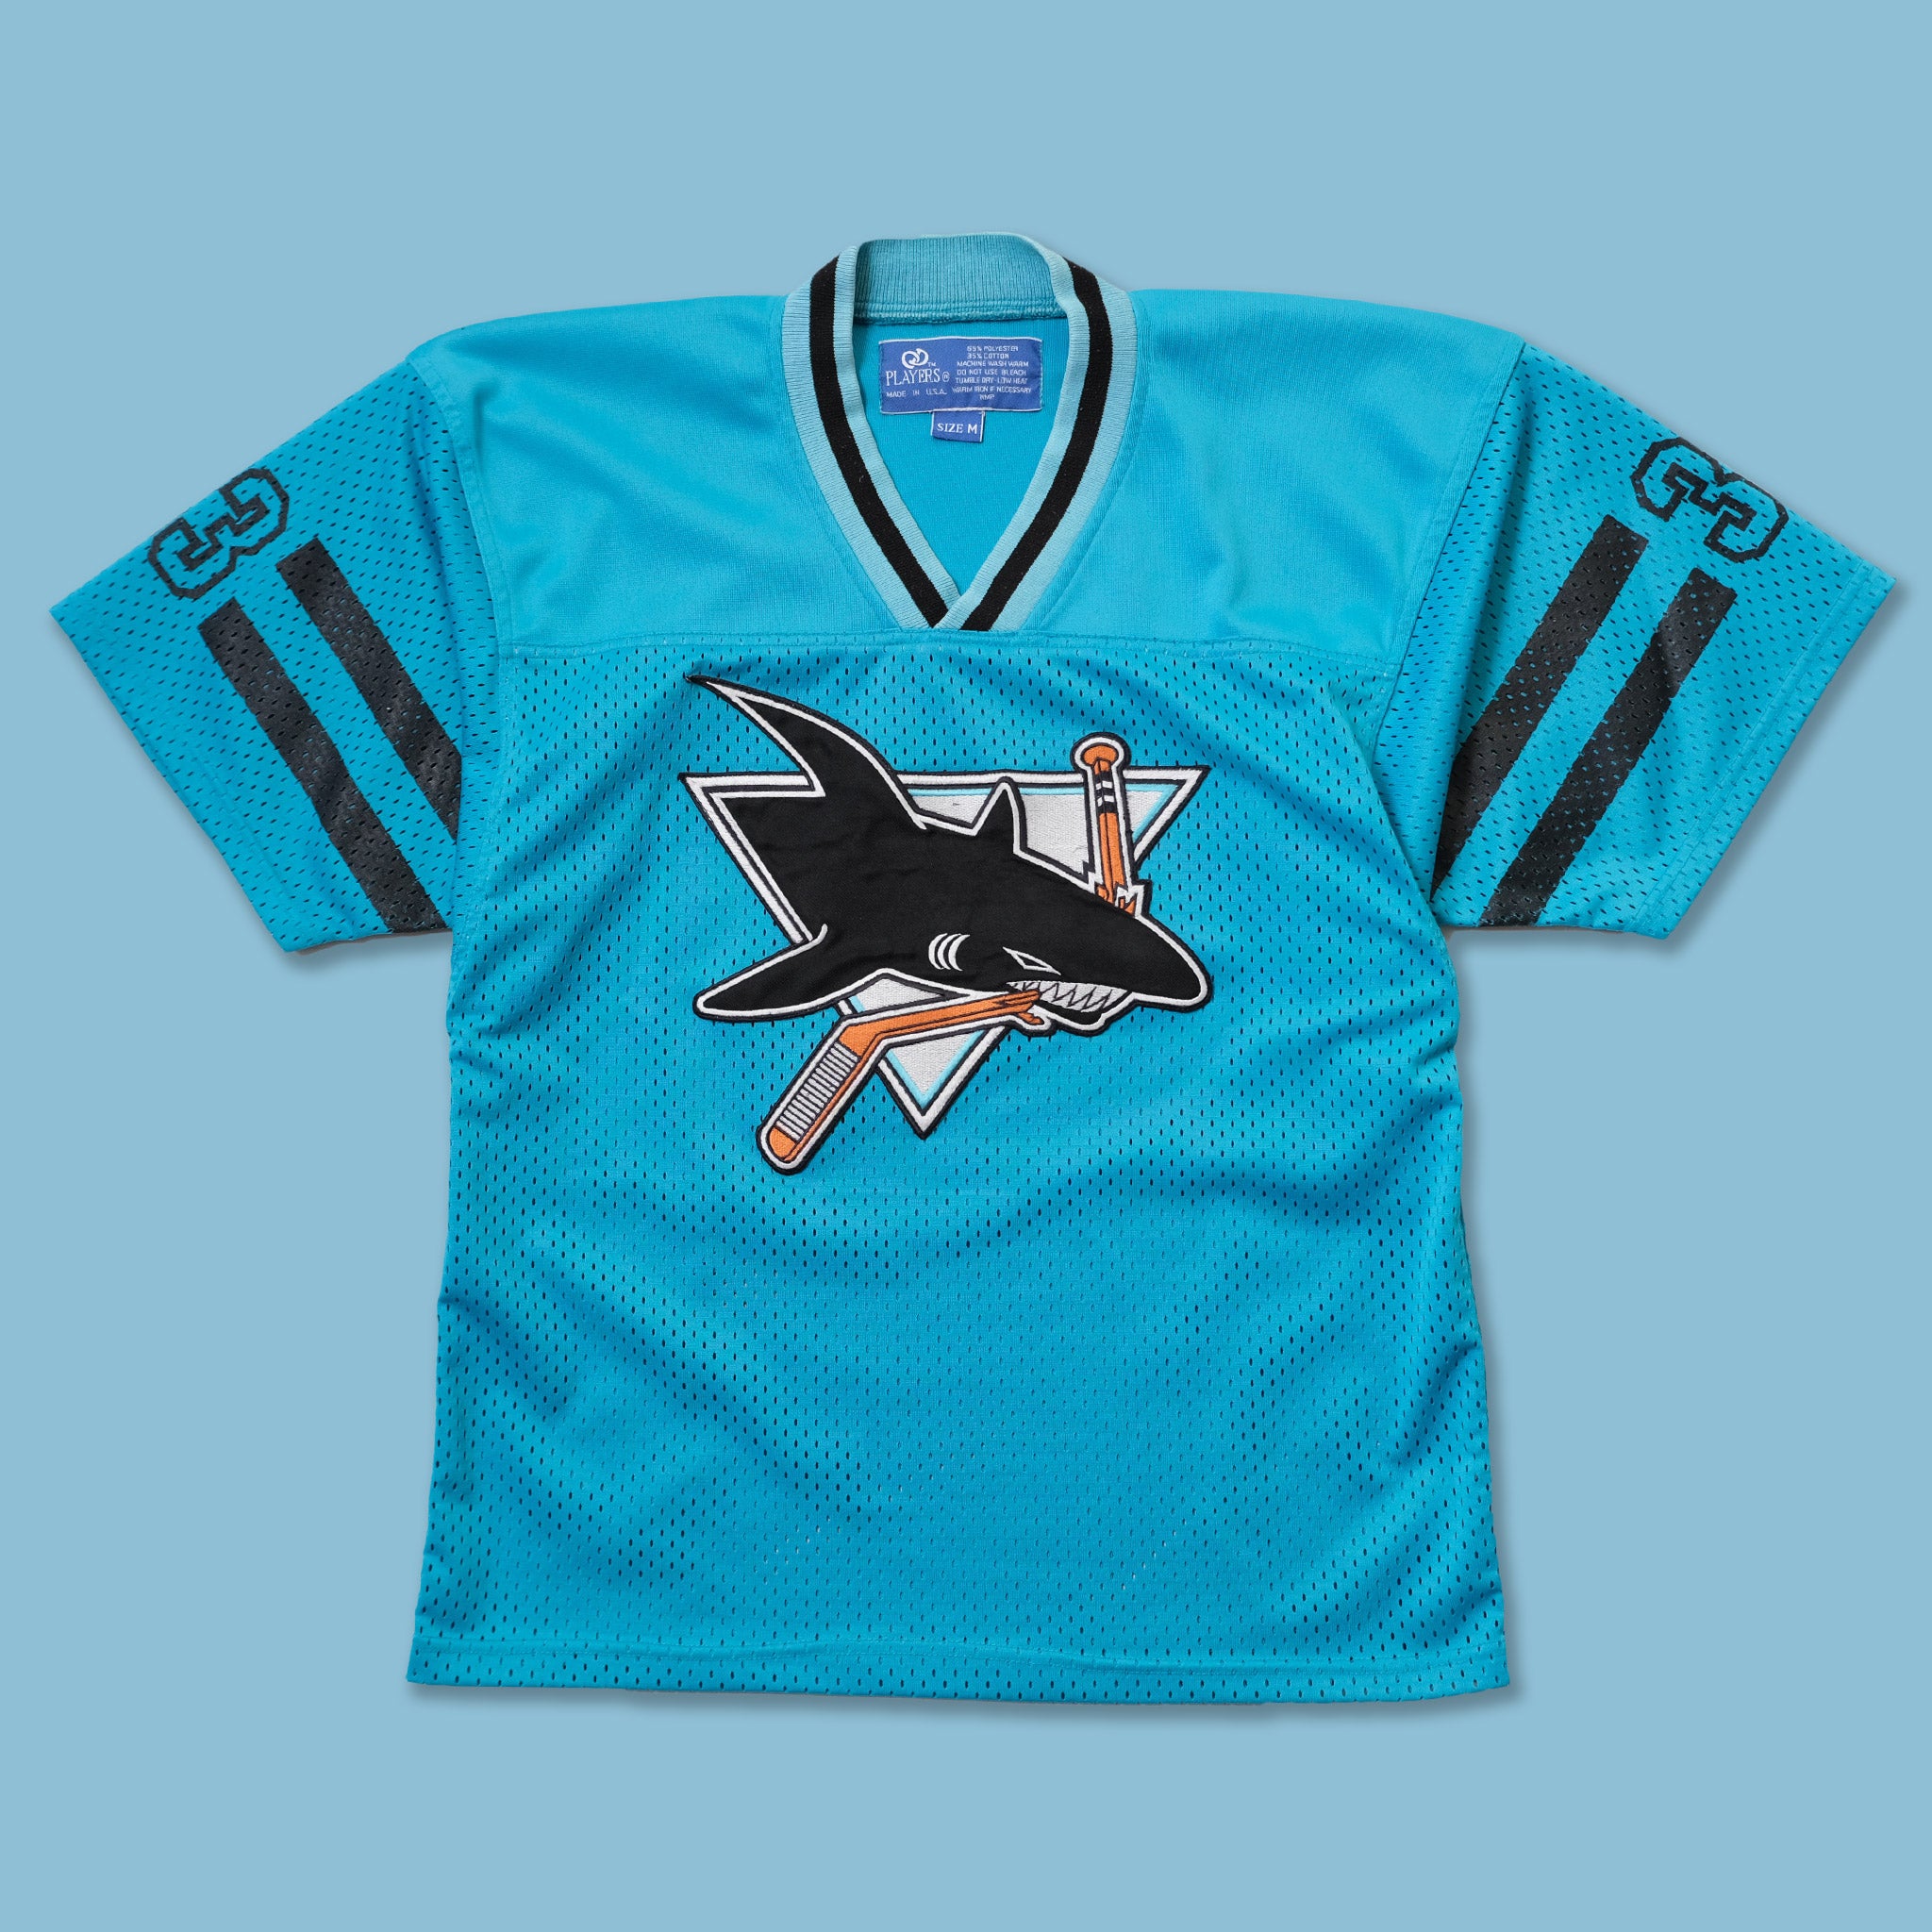 vintage san jose sharks jersey